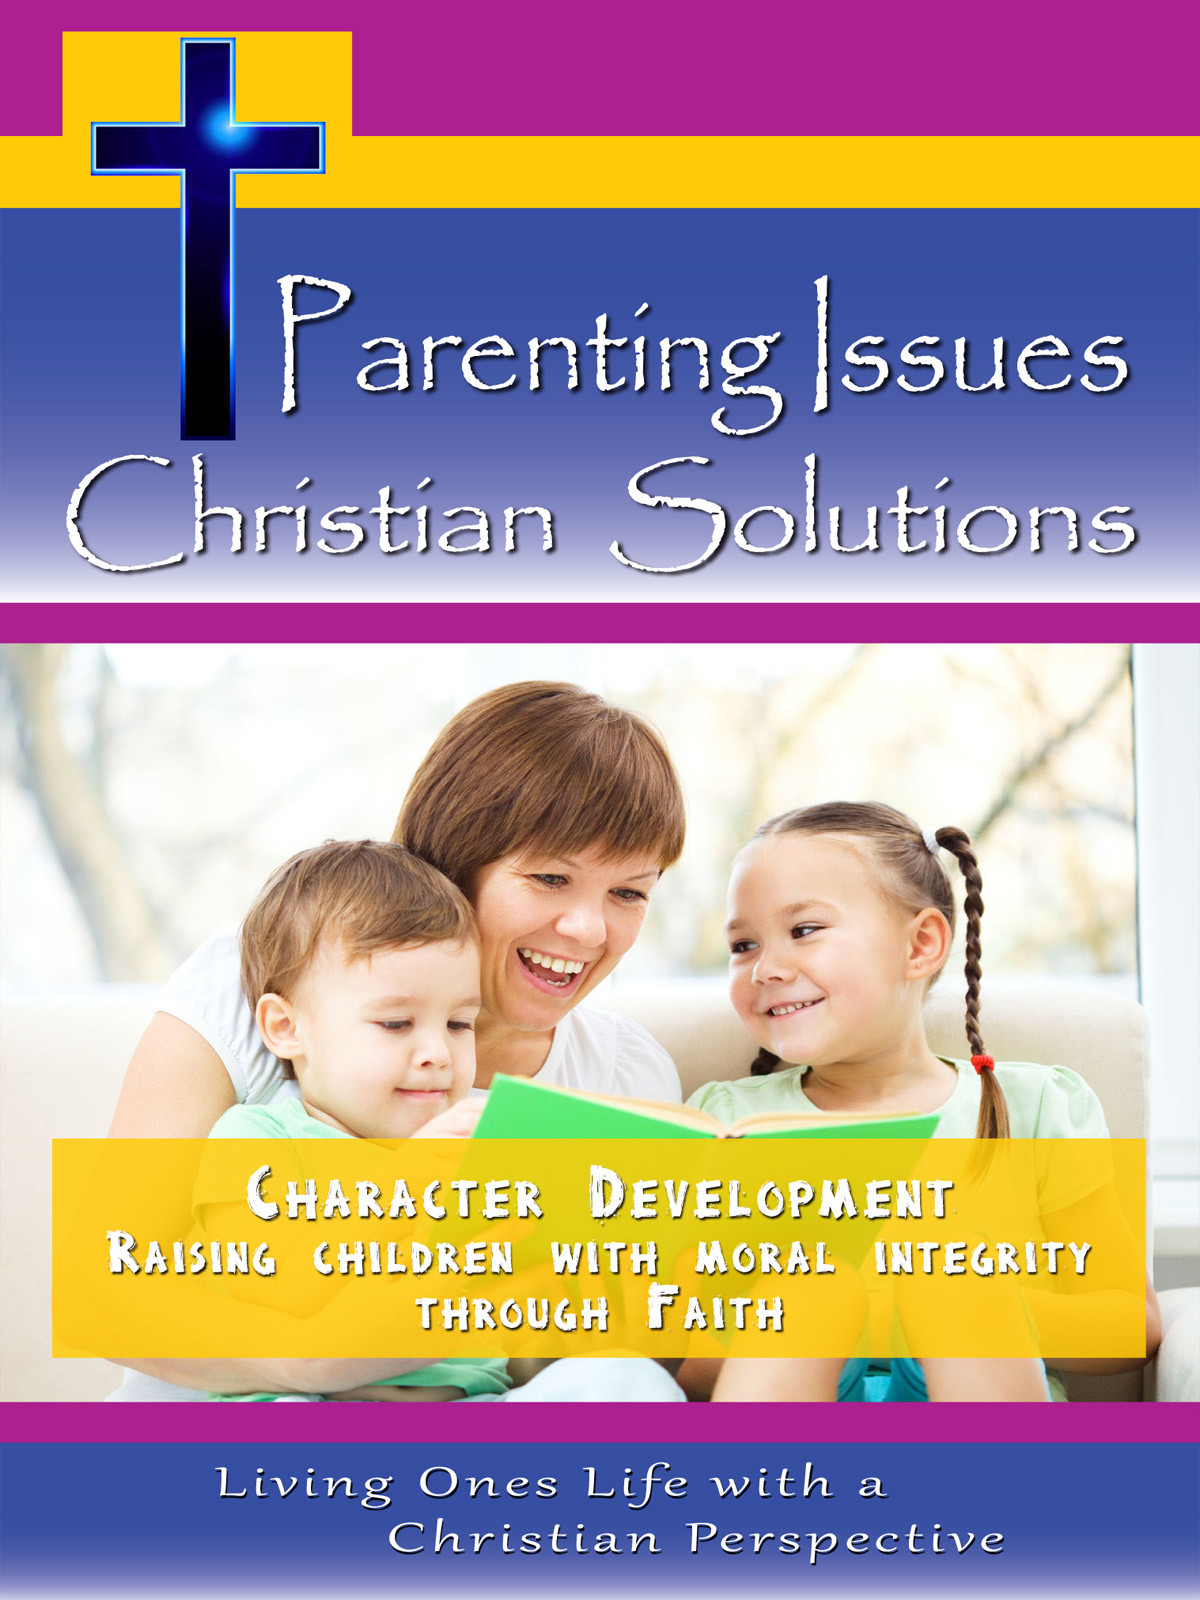 CH9999 - Character Development Raising children with moral integrity through faith